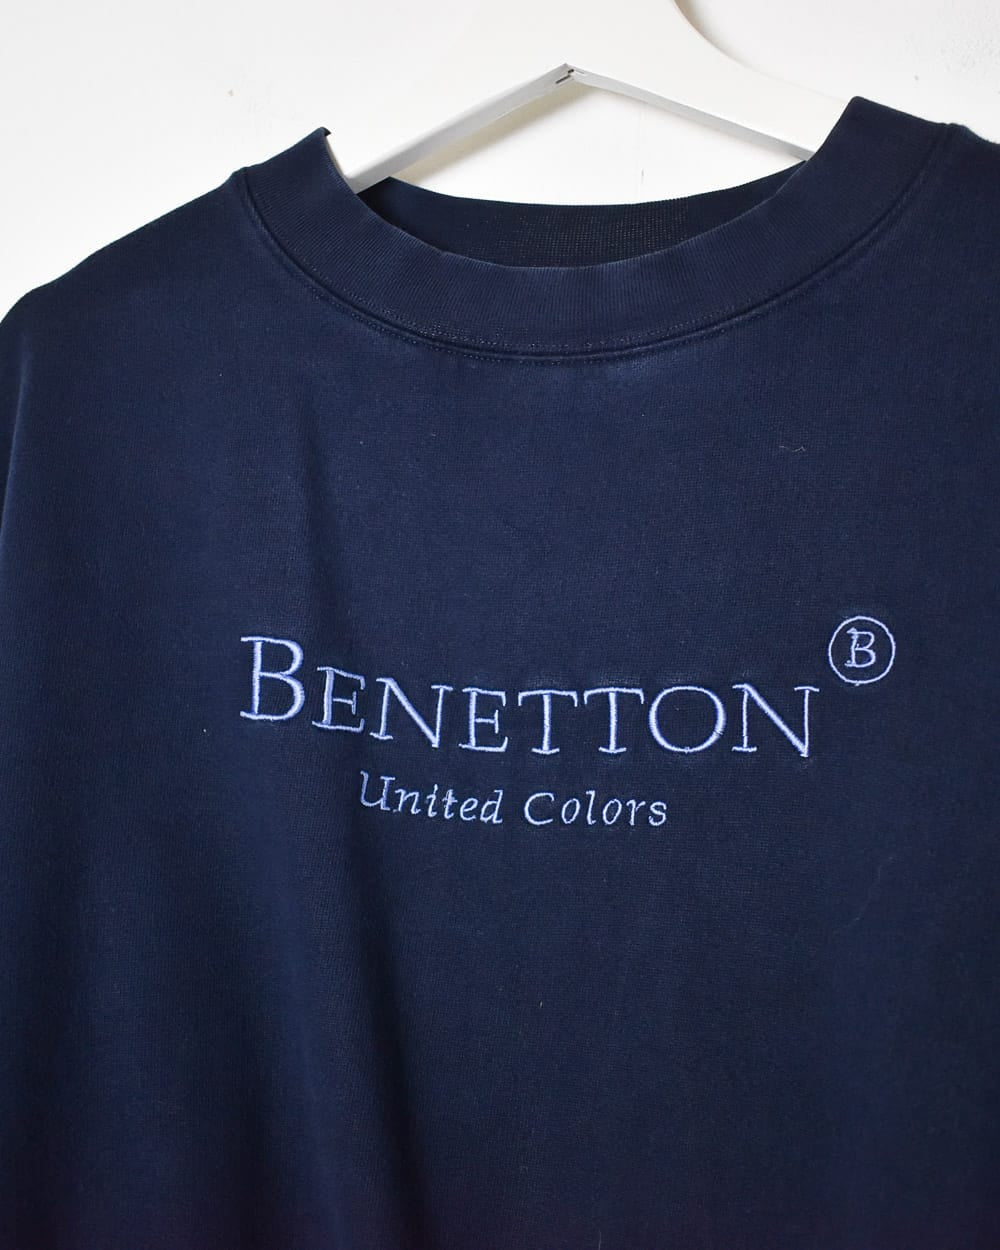 Navy United Colors Of Benetton Sweatshirt - Small